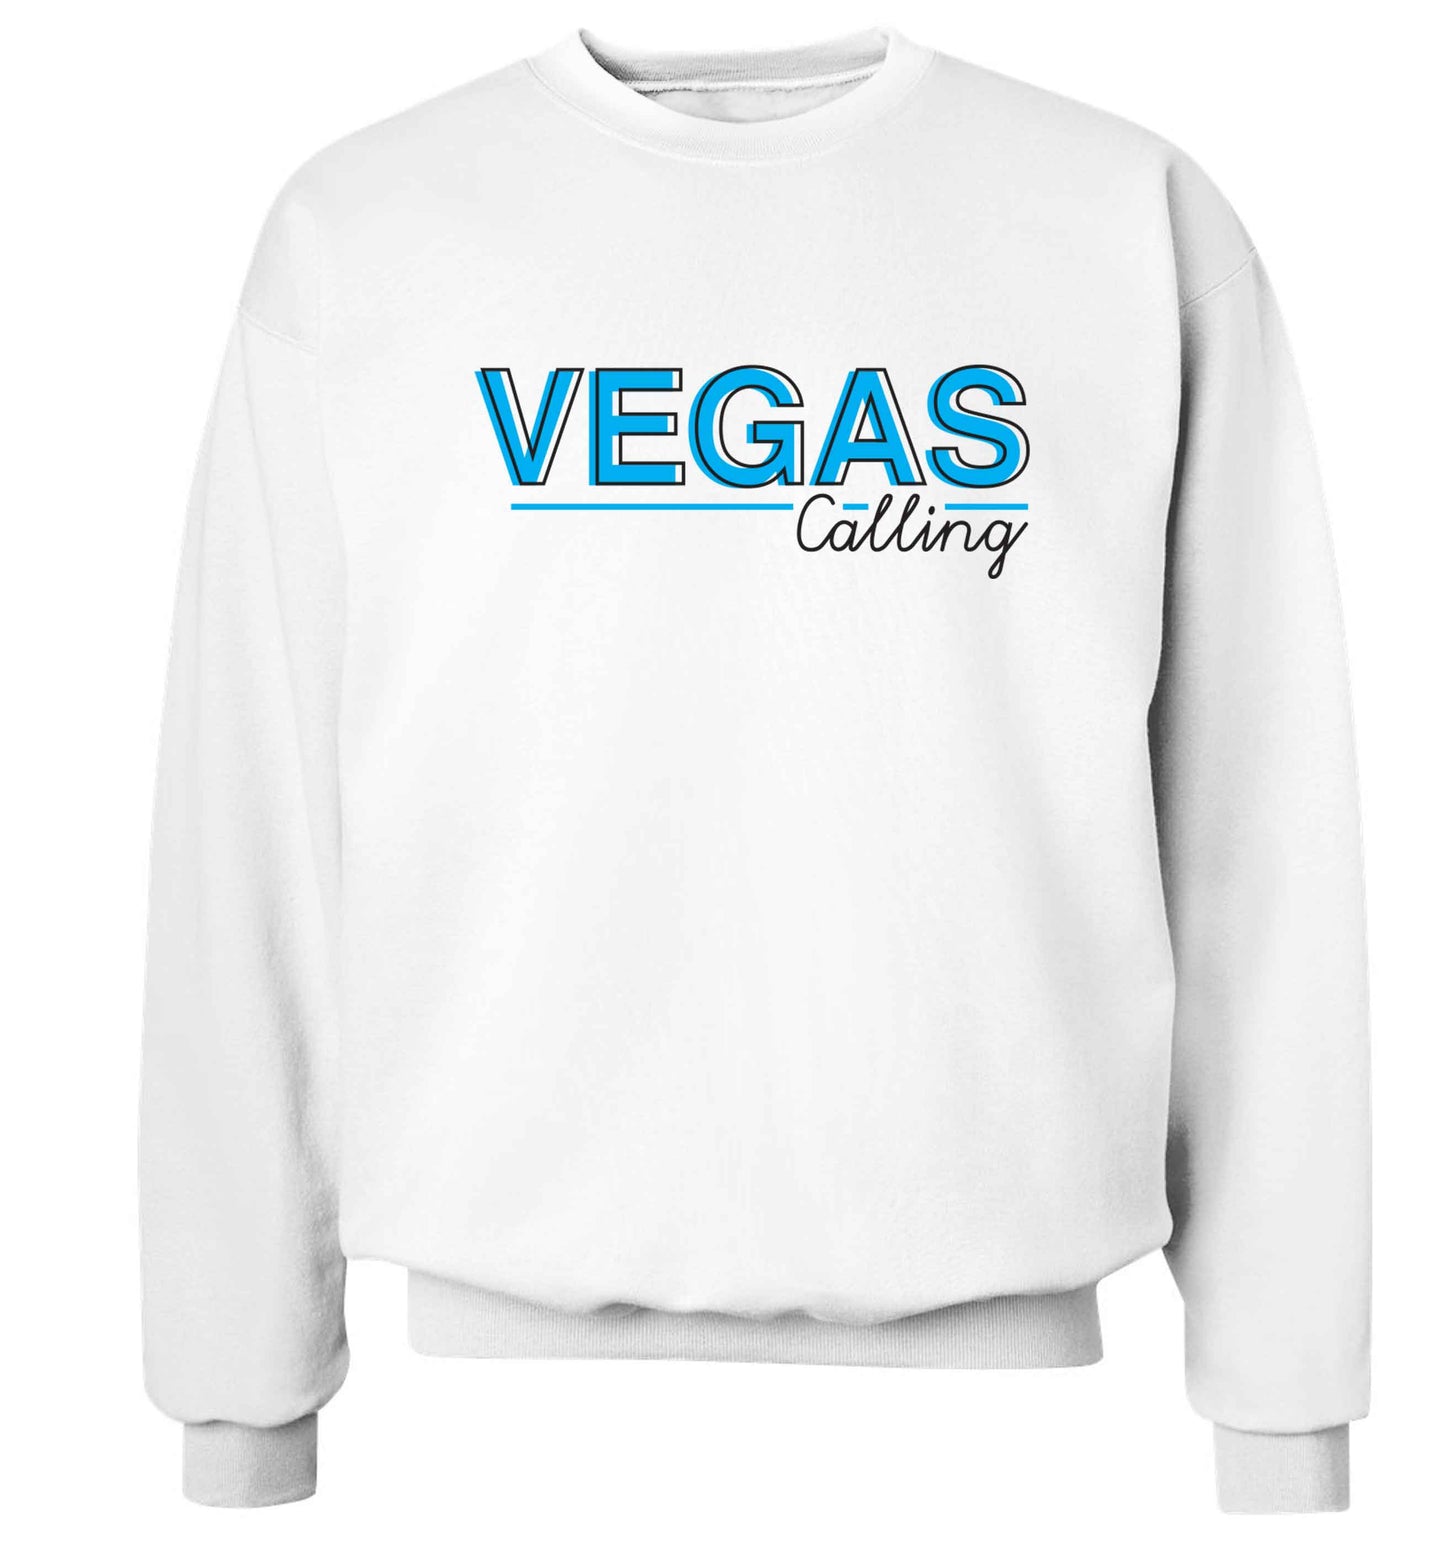 Vegas calling Adult's unisex white Sweater 2XL